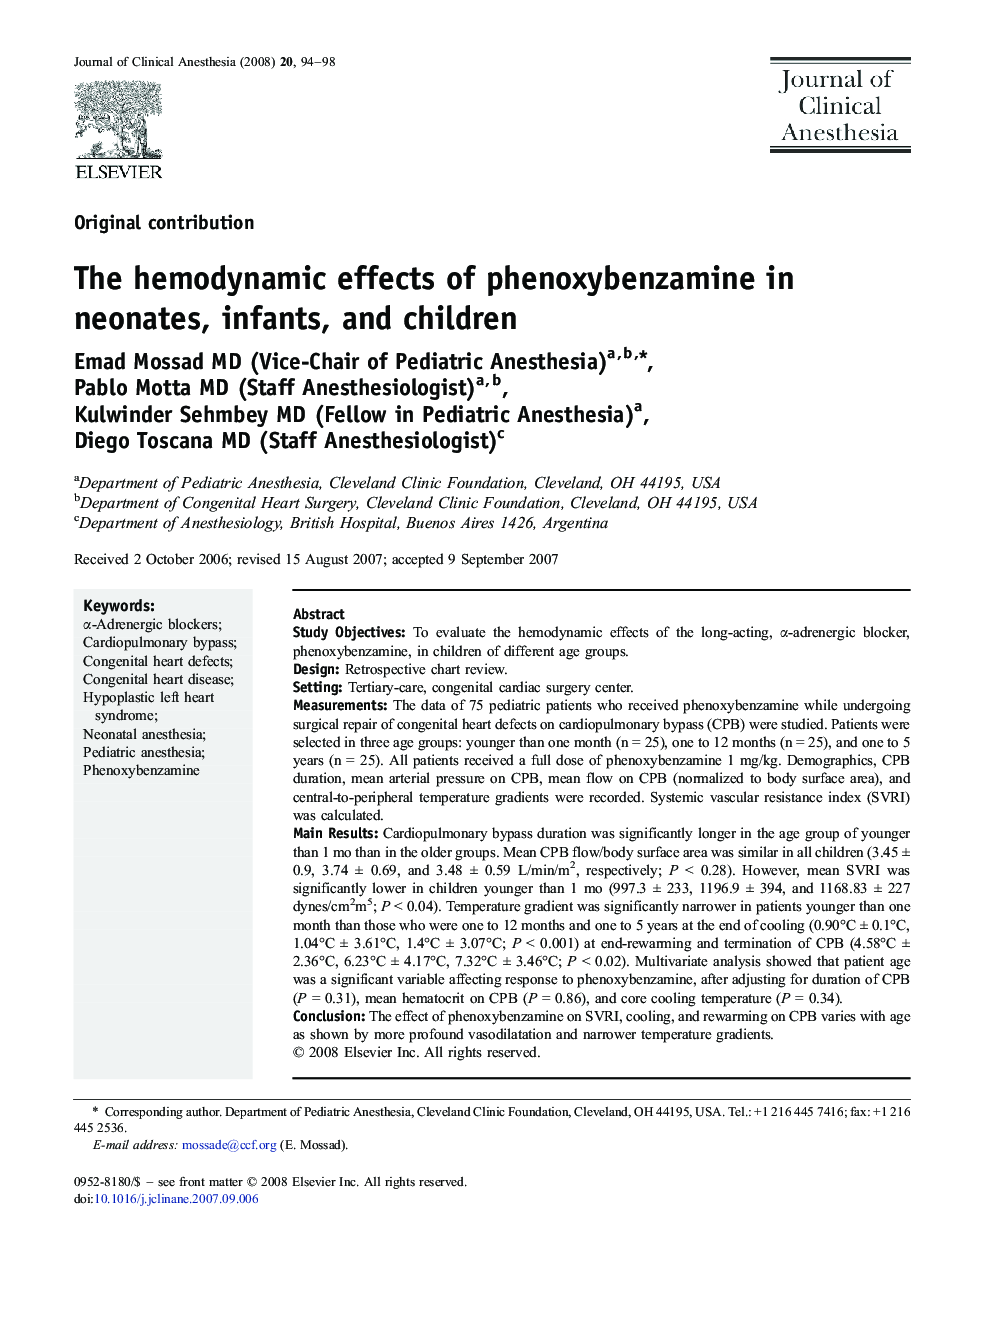 The hemodynamic effects of phenoxybenzamine in neonates, infants, and children